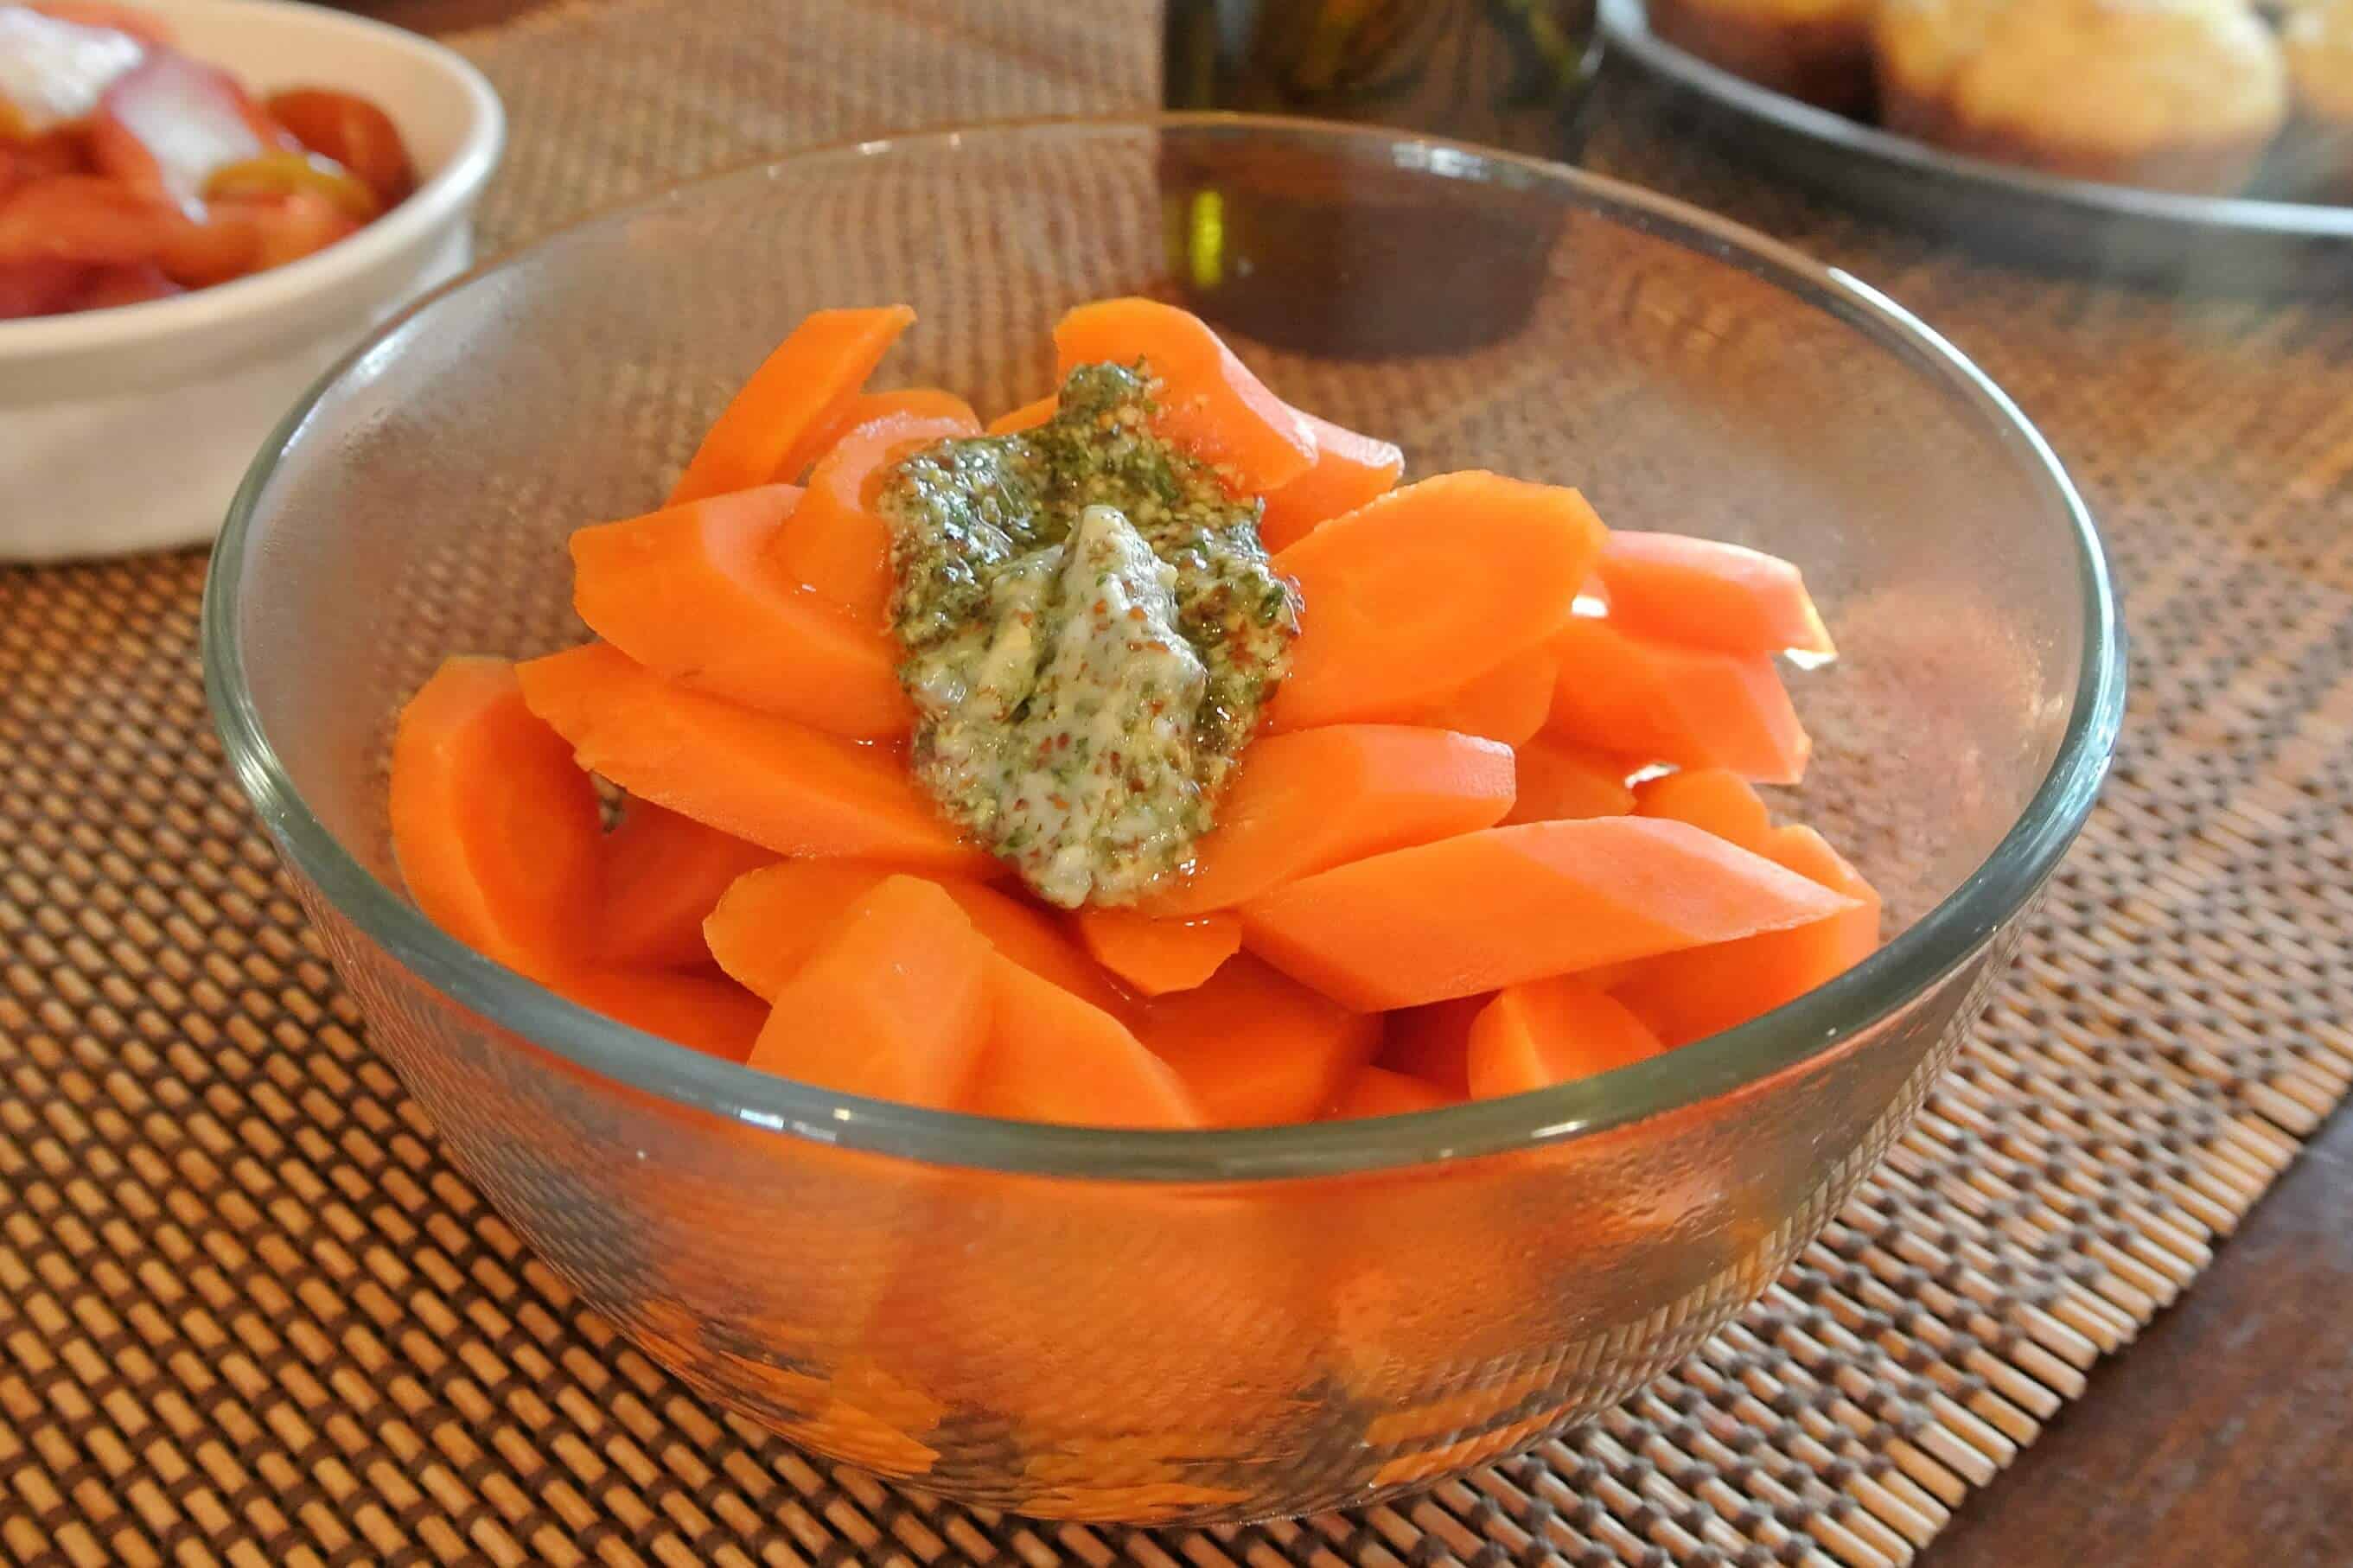 Parsley-Mustard Glazed Carrots